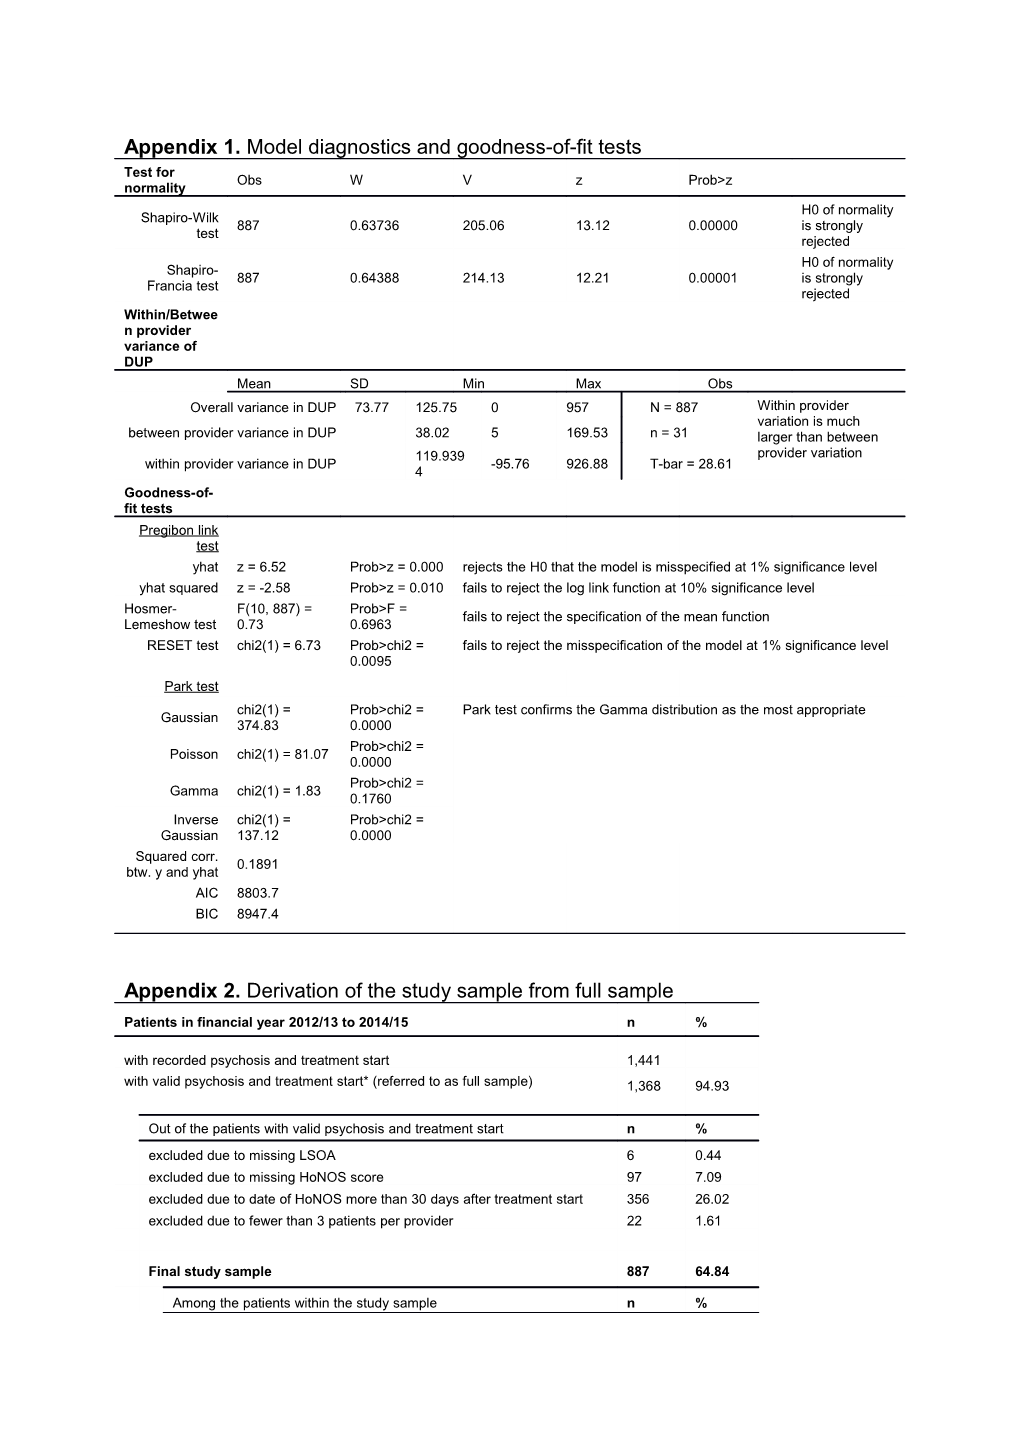 Appendix 1. Model Diagnostics and Goodness-Of-Fit Tests